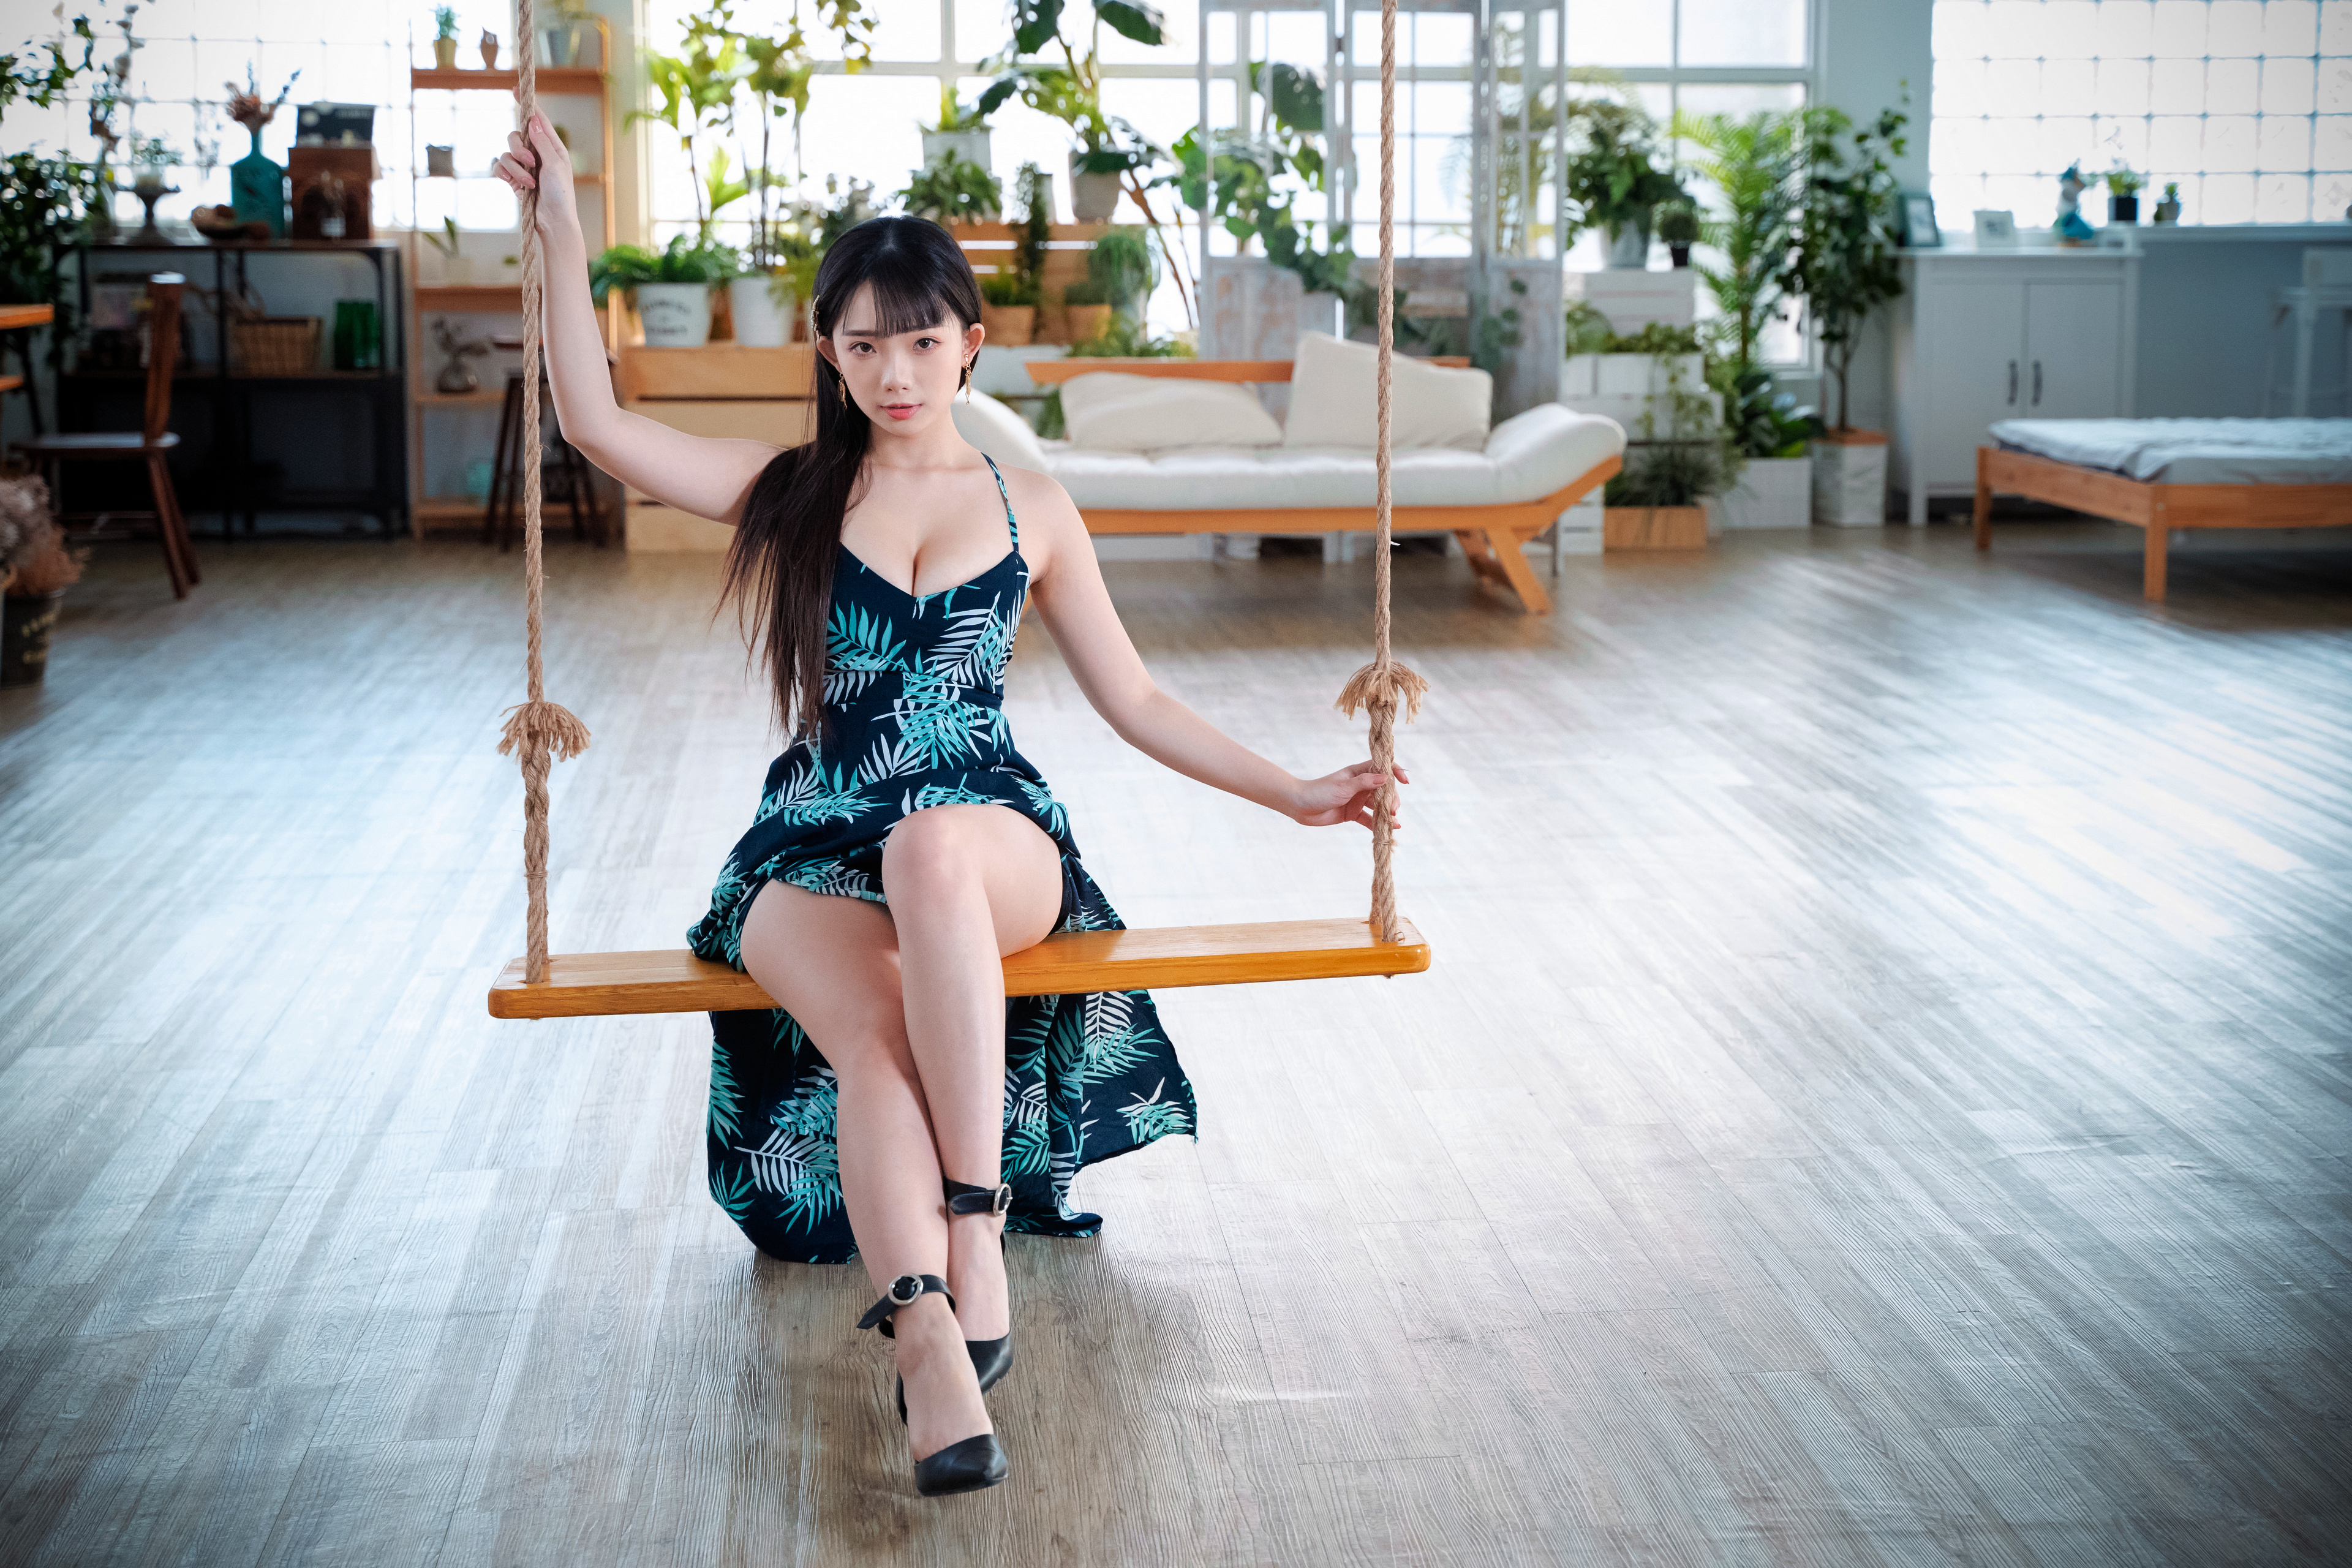 Asian Model Women Long Hair Dark Hair Flower Dress Swings Rope Swing Black High Heels Couch Sitting  3840x2560